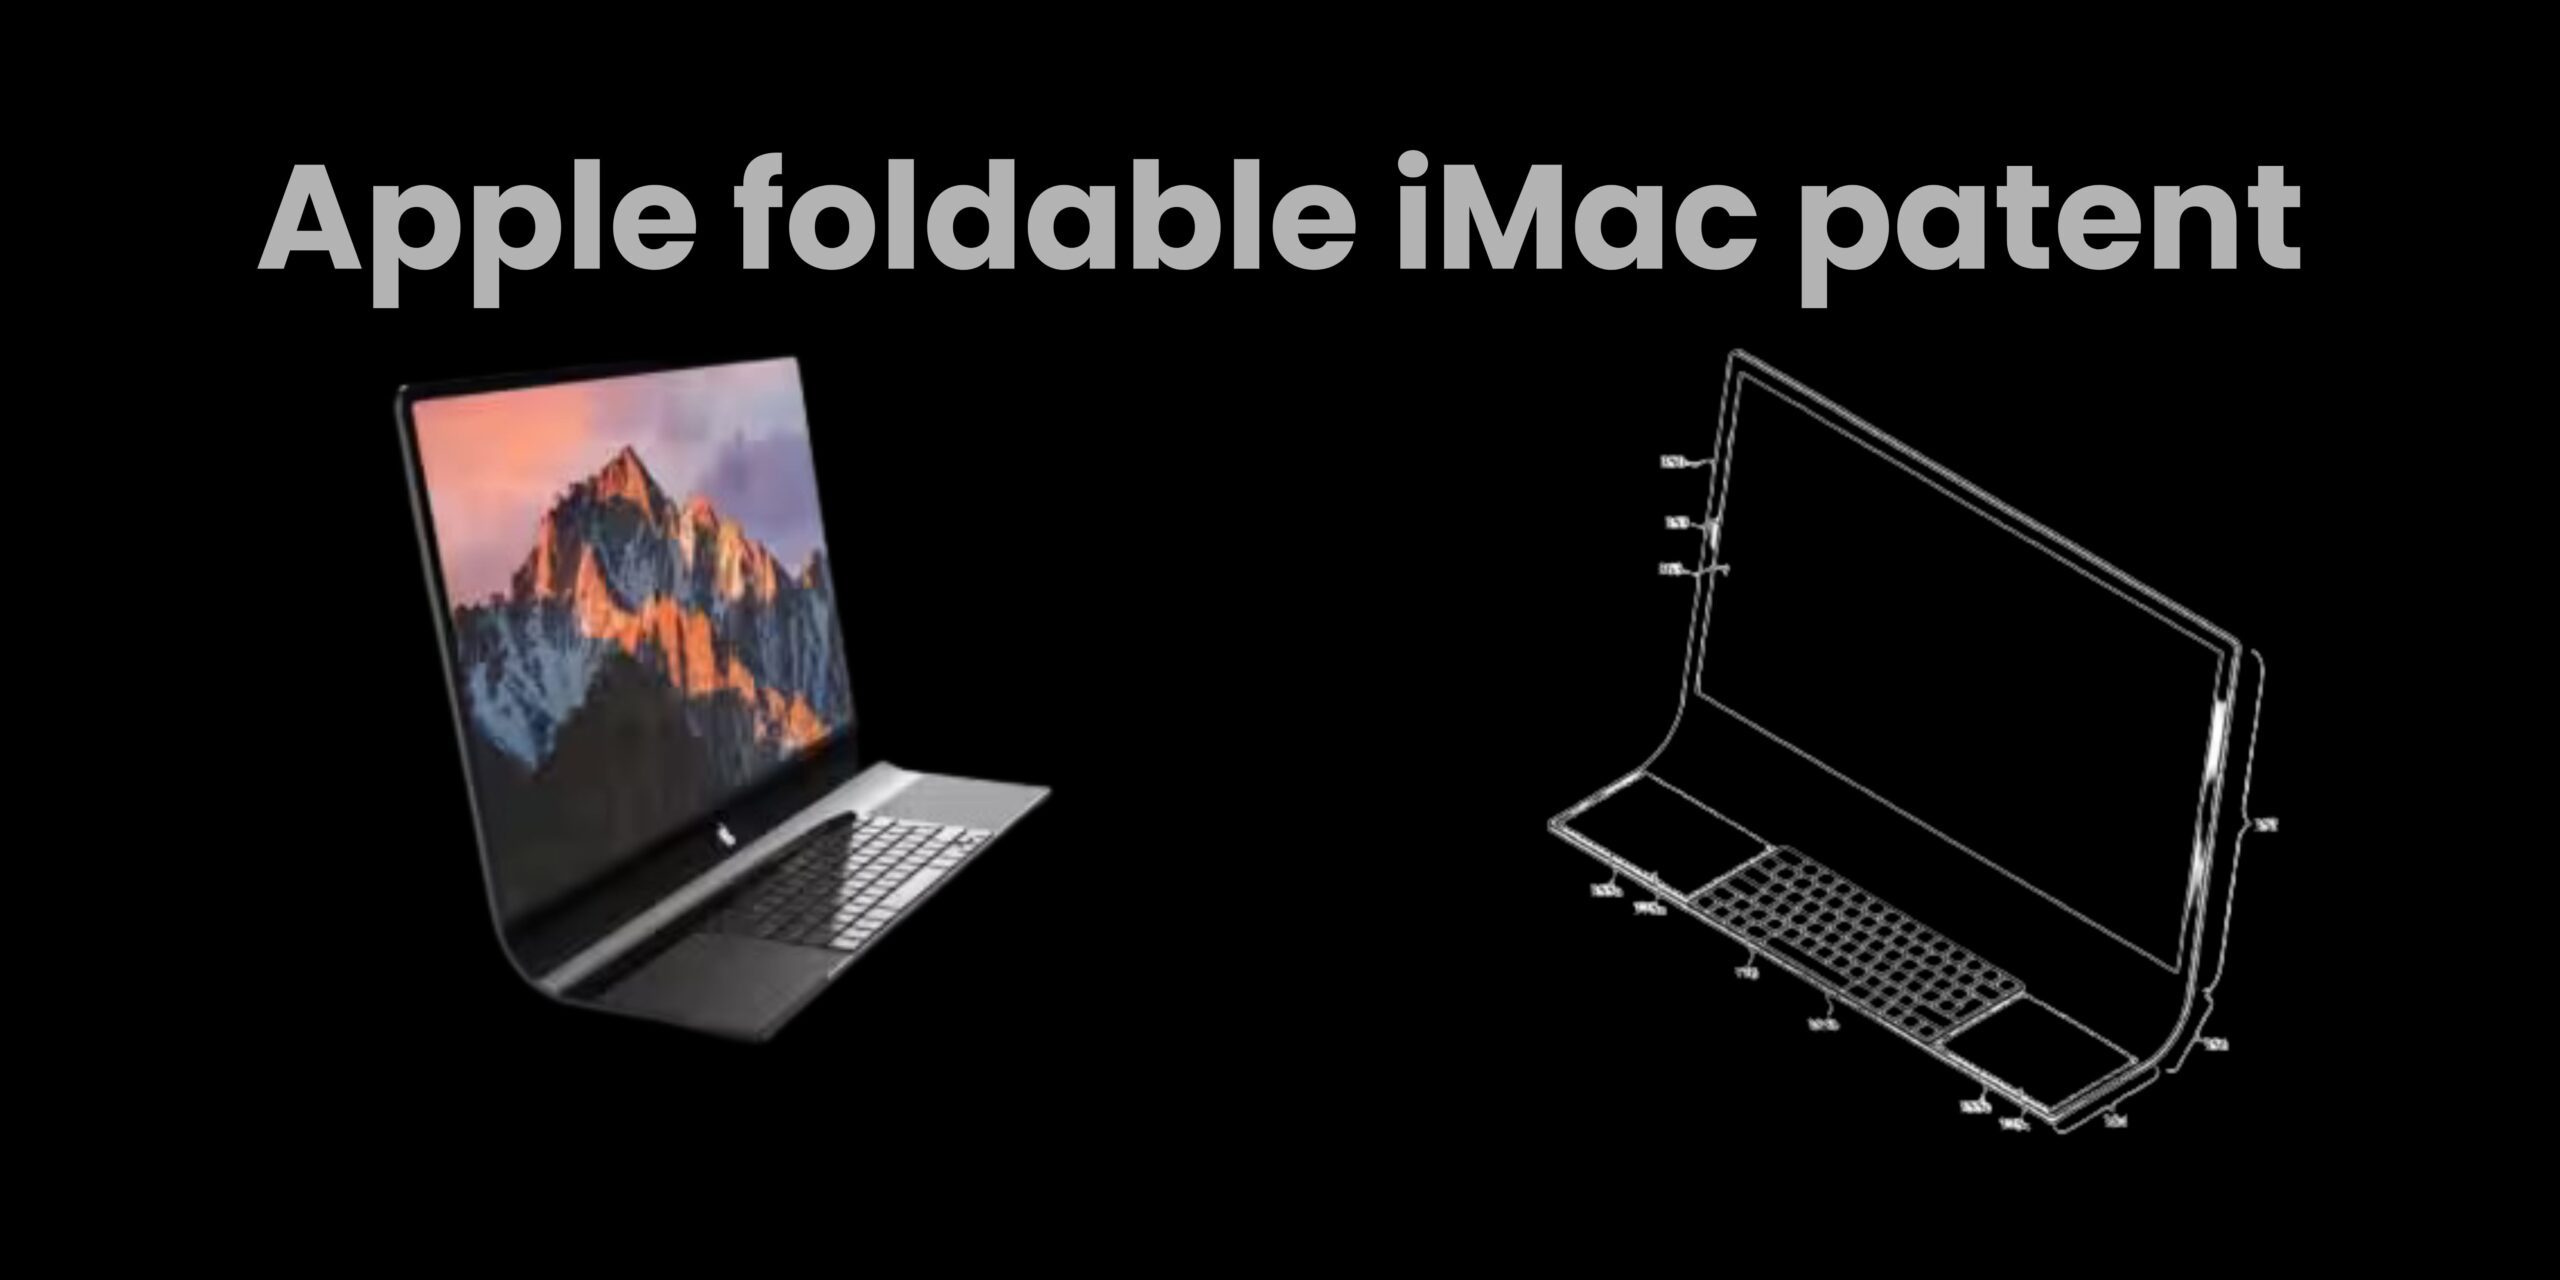 Apple foldable iMac patent